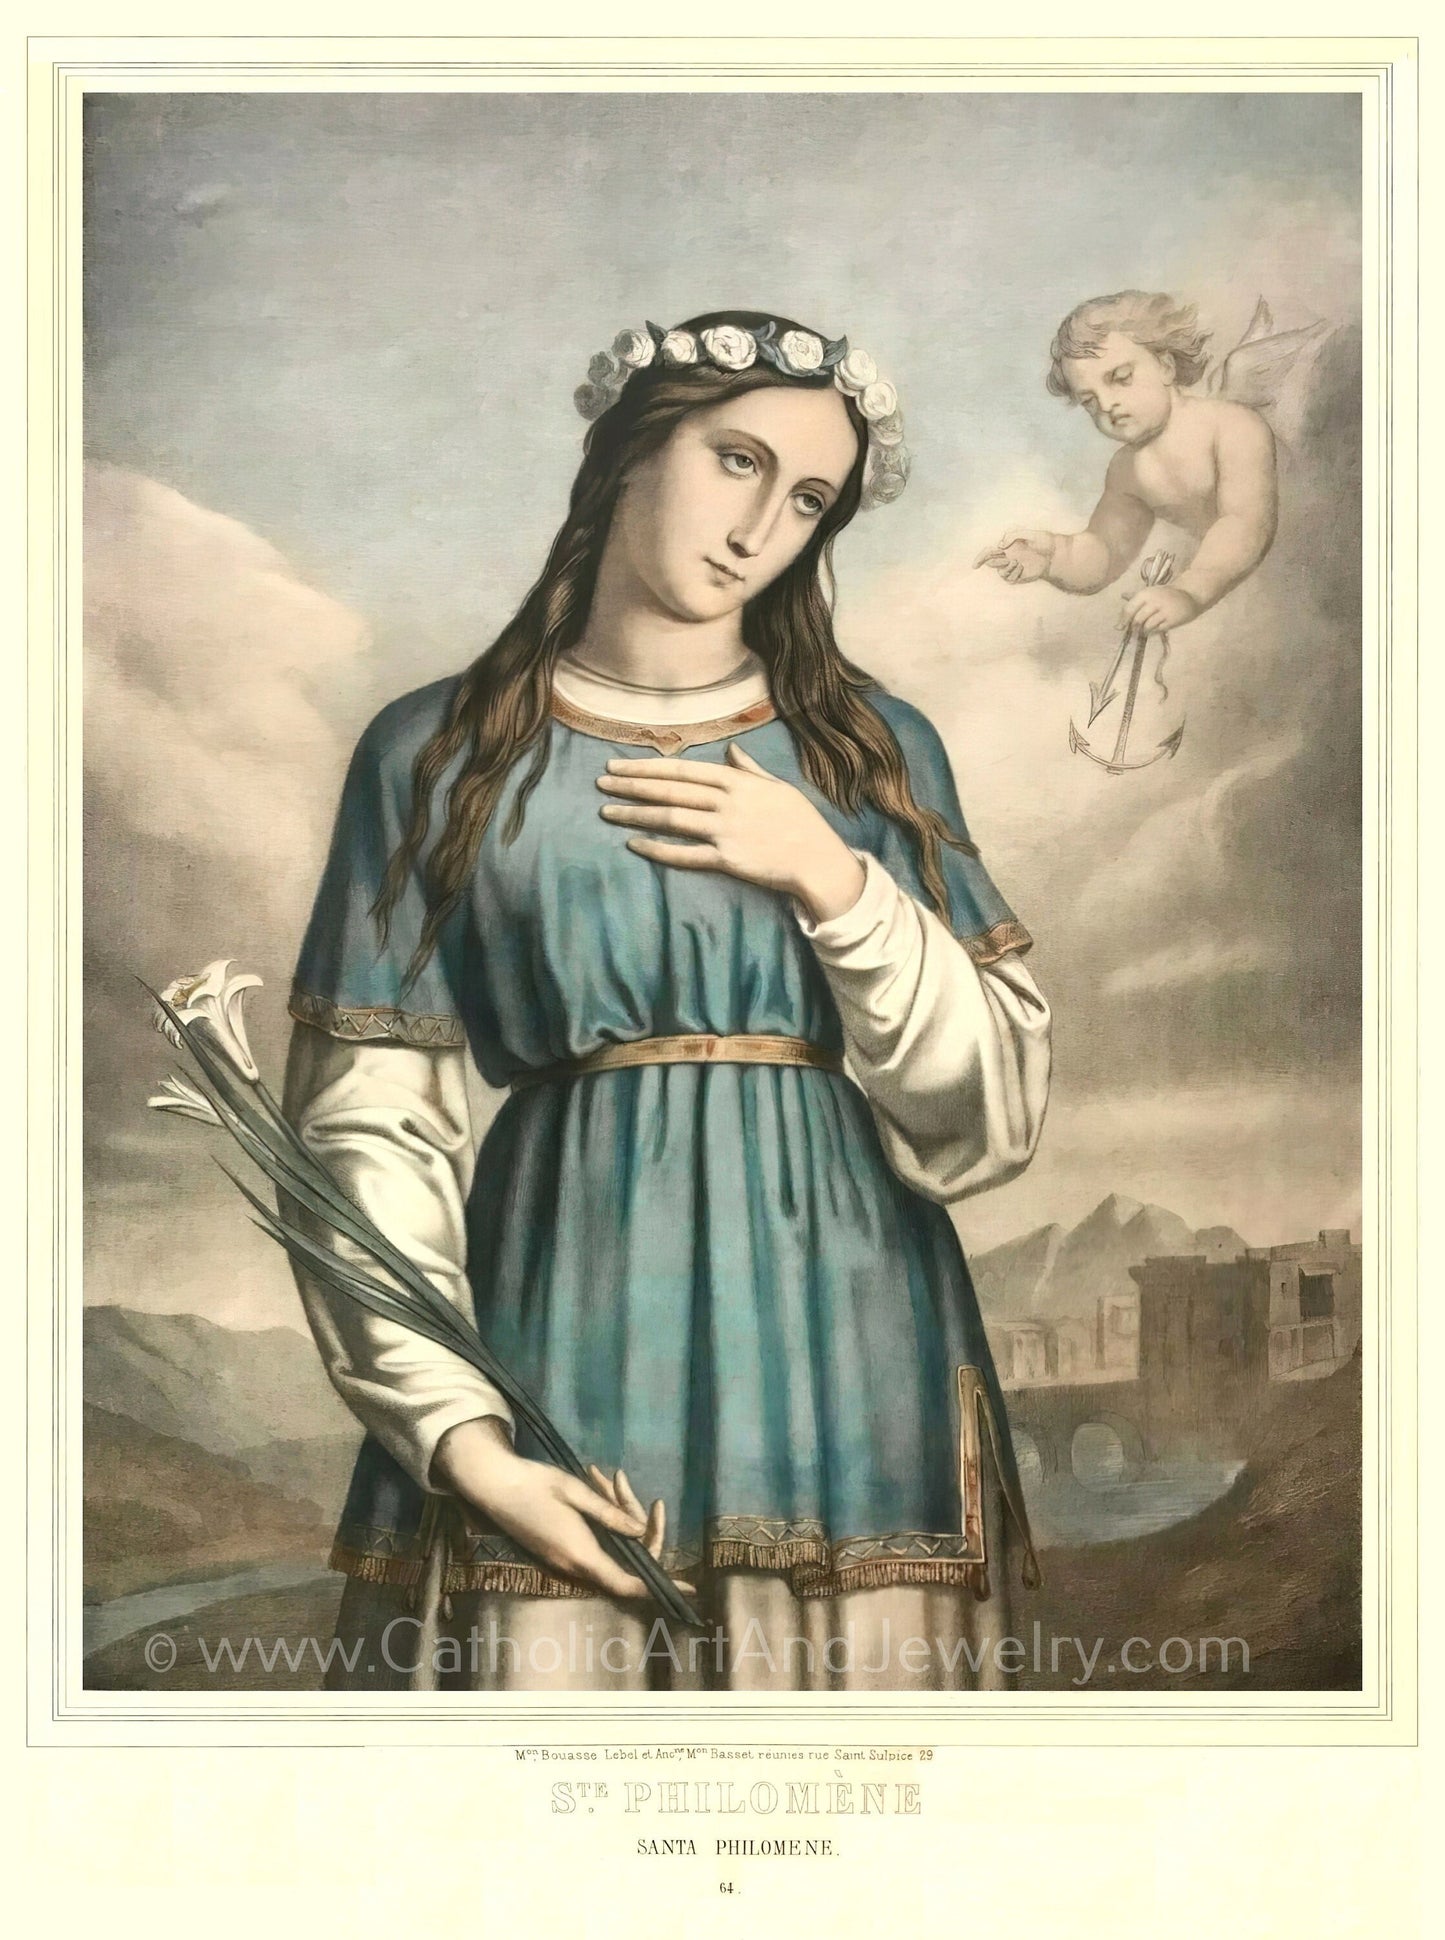 St. Philomena – Catholic Art Print – Archival Quality